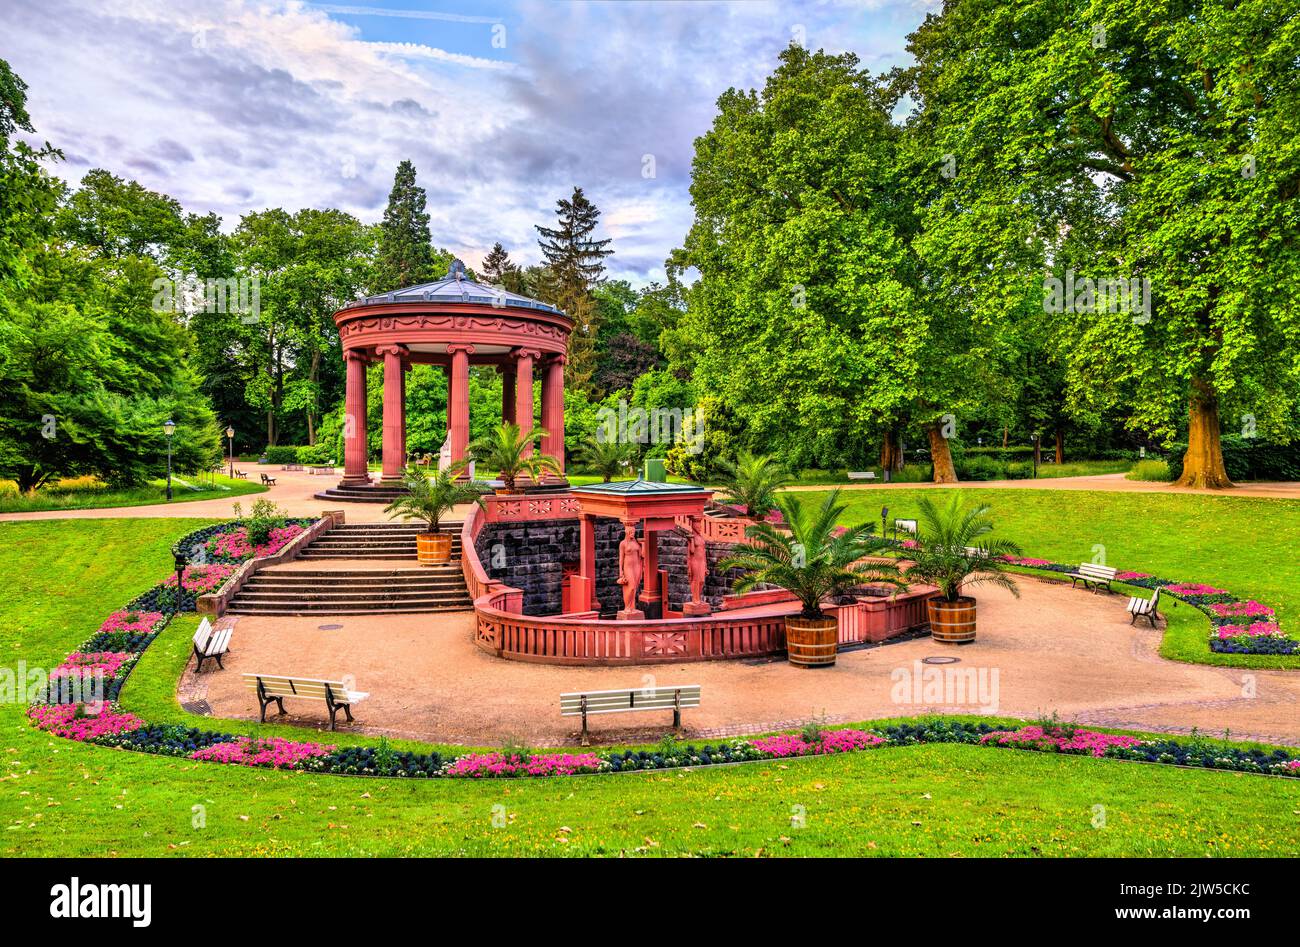 Elisabethenbrunnen fountain in Kurpark in Bad Homburg, Germany Stock Photo